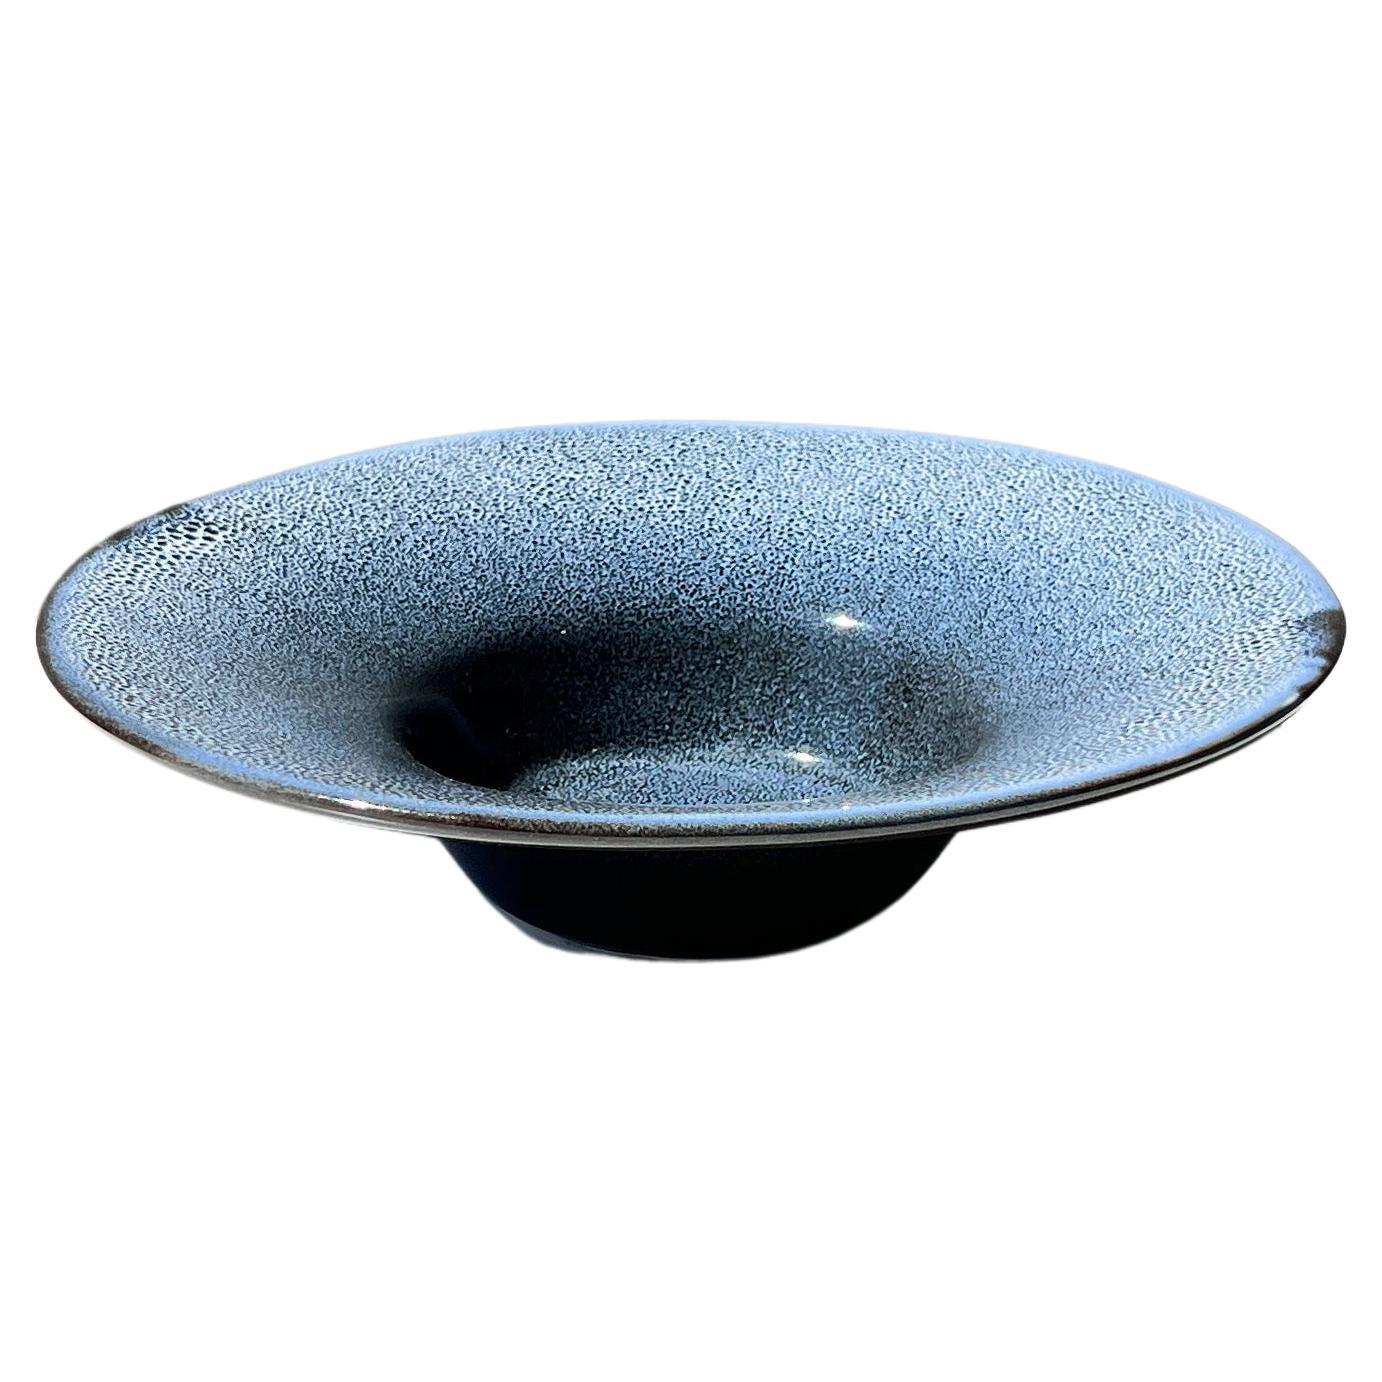 Indigo Handmade Stoneware Serving Bowl in White and Navy Glaze